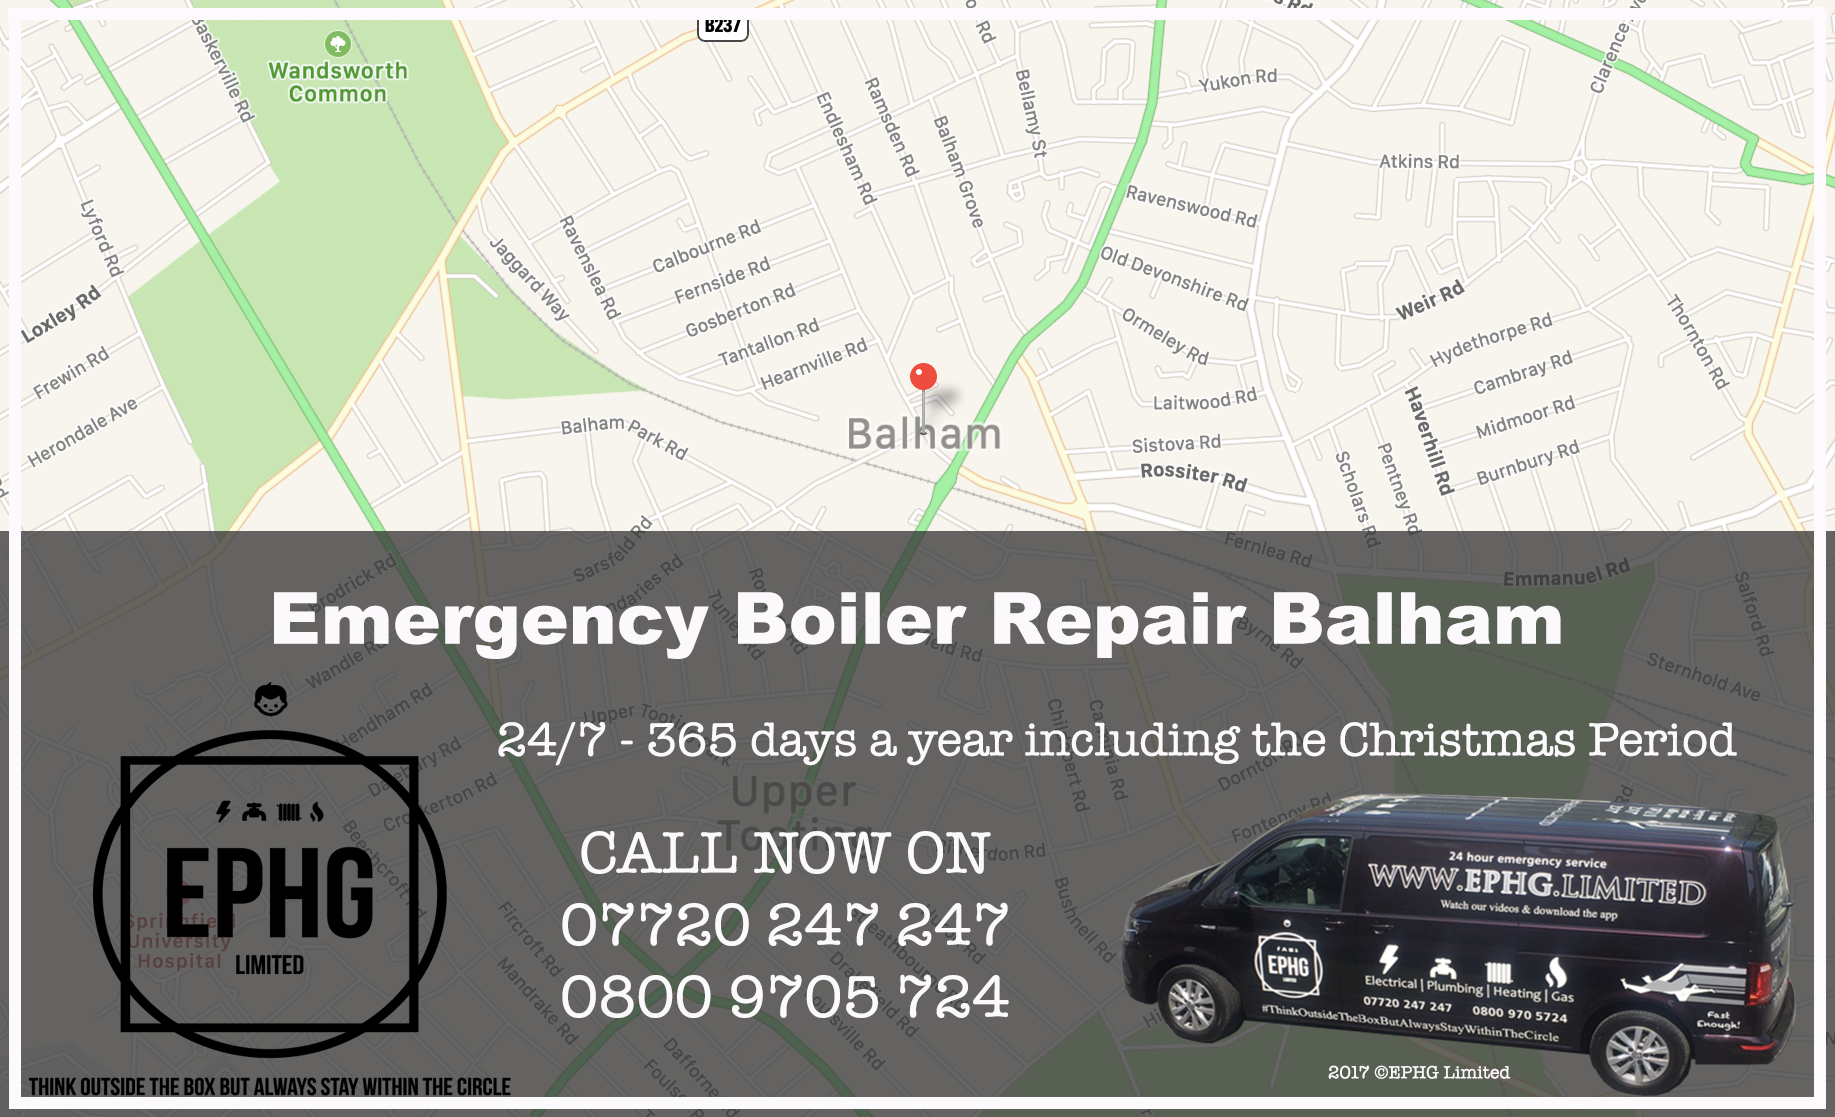 24 Hour Emergency Boiler Repair Balham